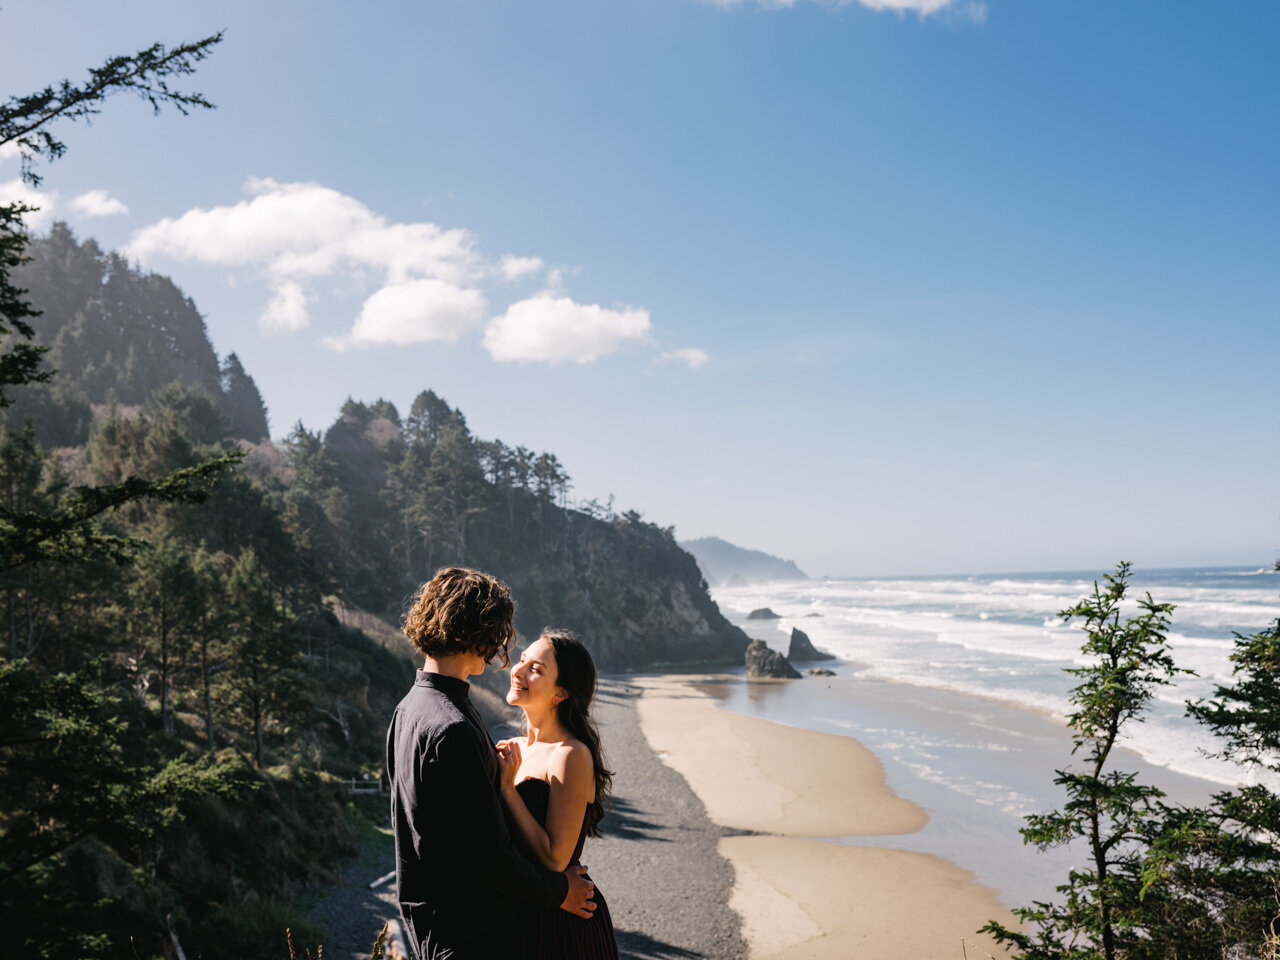  Engaged couple stands on cliffside overlooking sunny Oregon coastline 